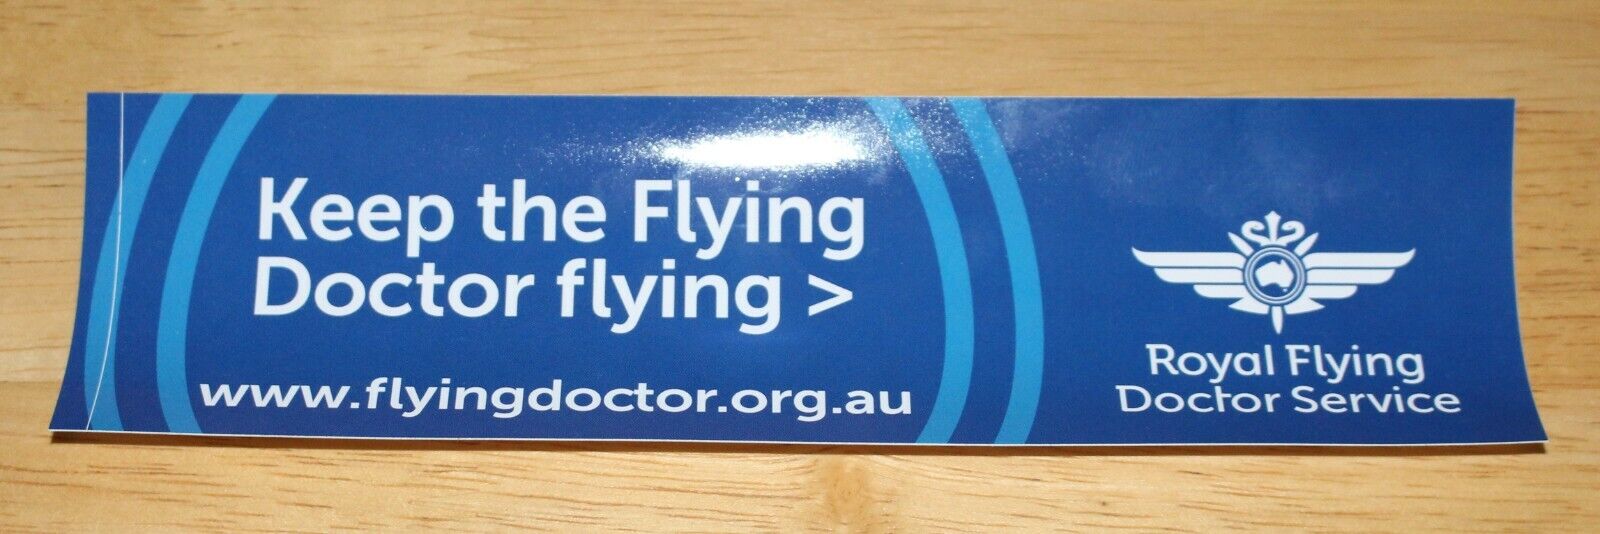 RFDS Royal Flying Doctor Service (Australia) Air Ambulance Sticker